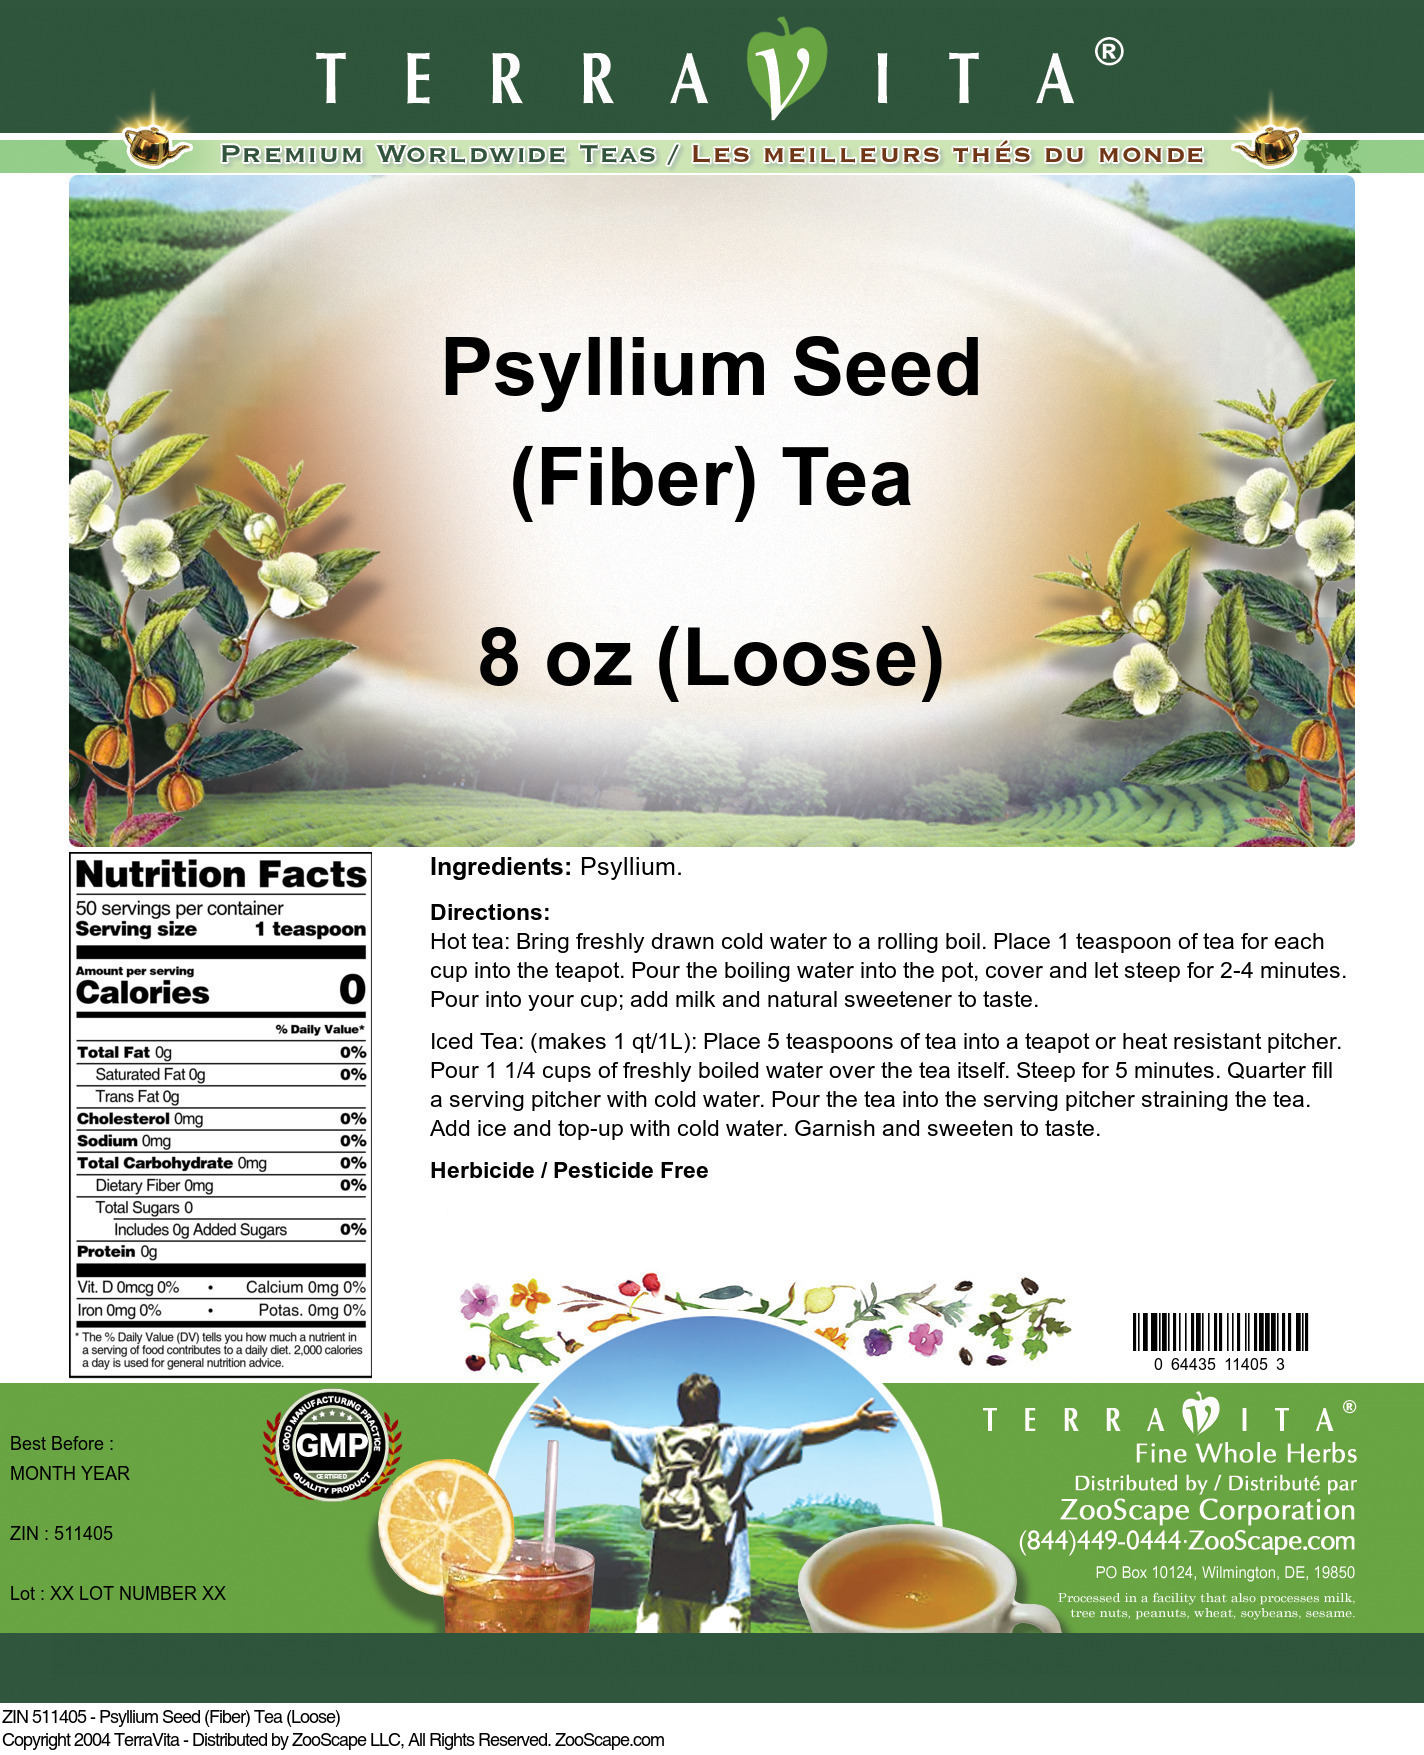 Psyllium Seed (Fiber) Tea (Loose) - Label